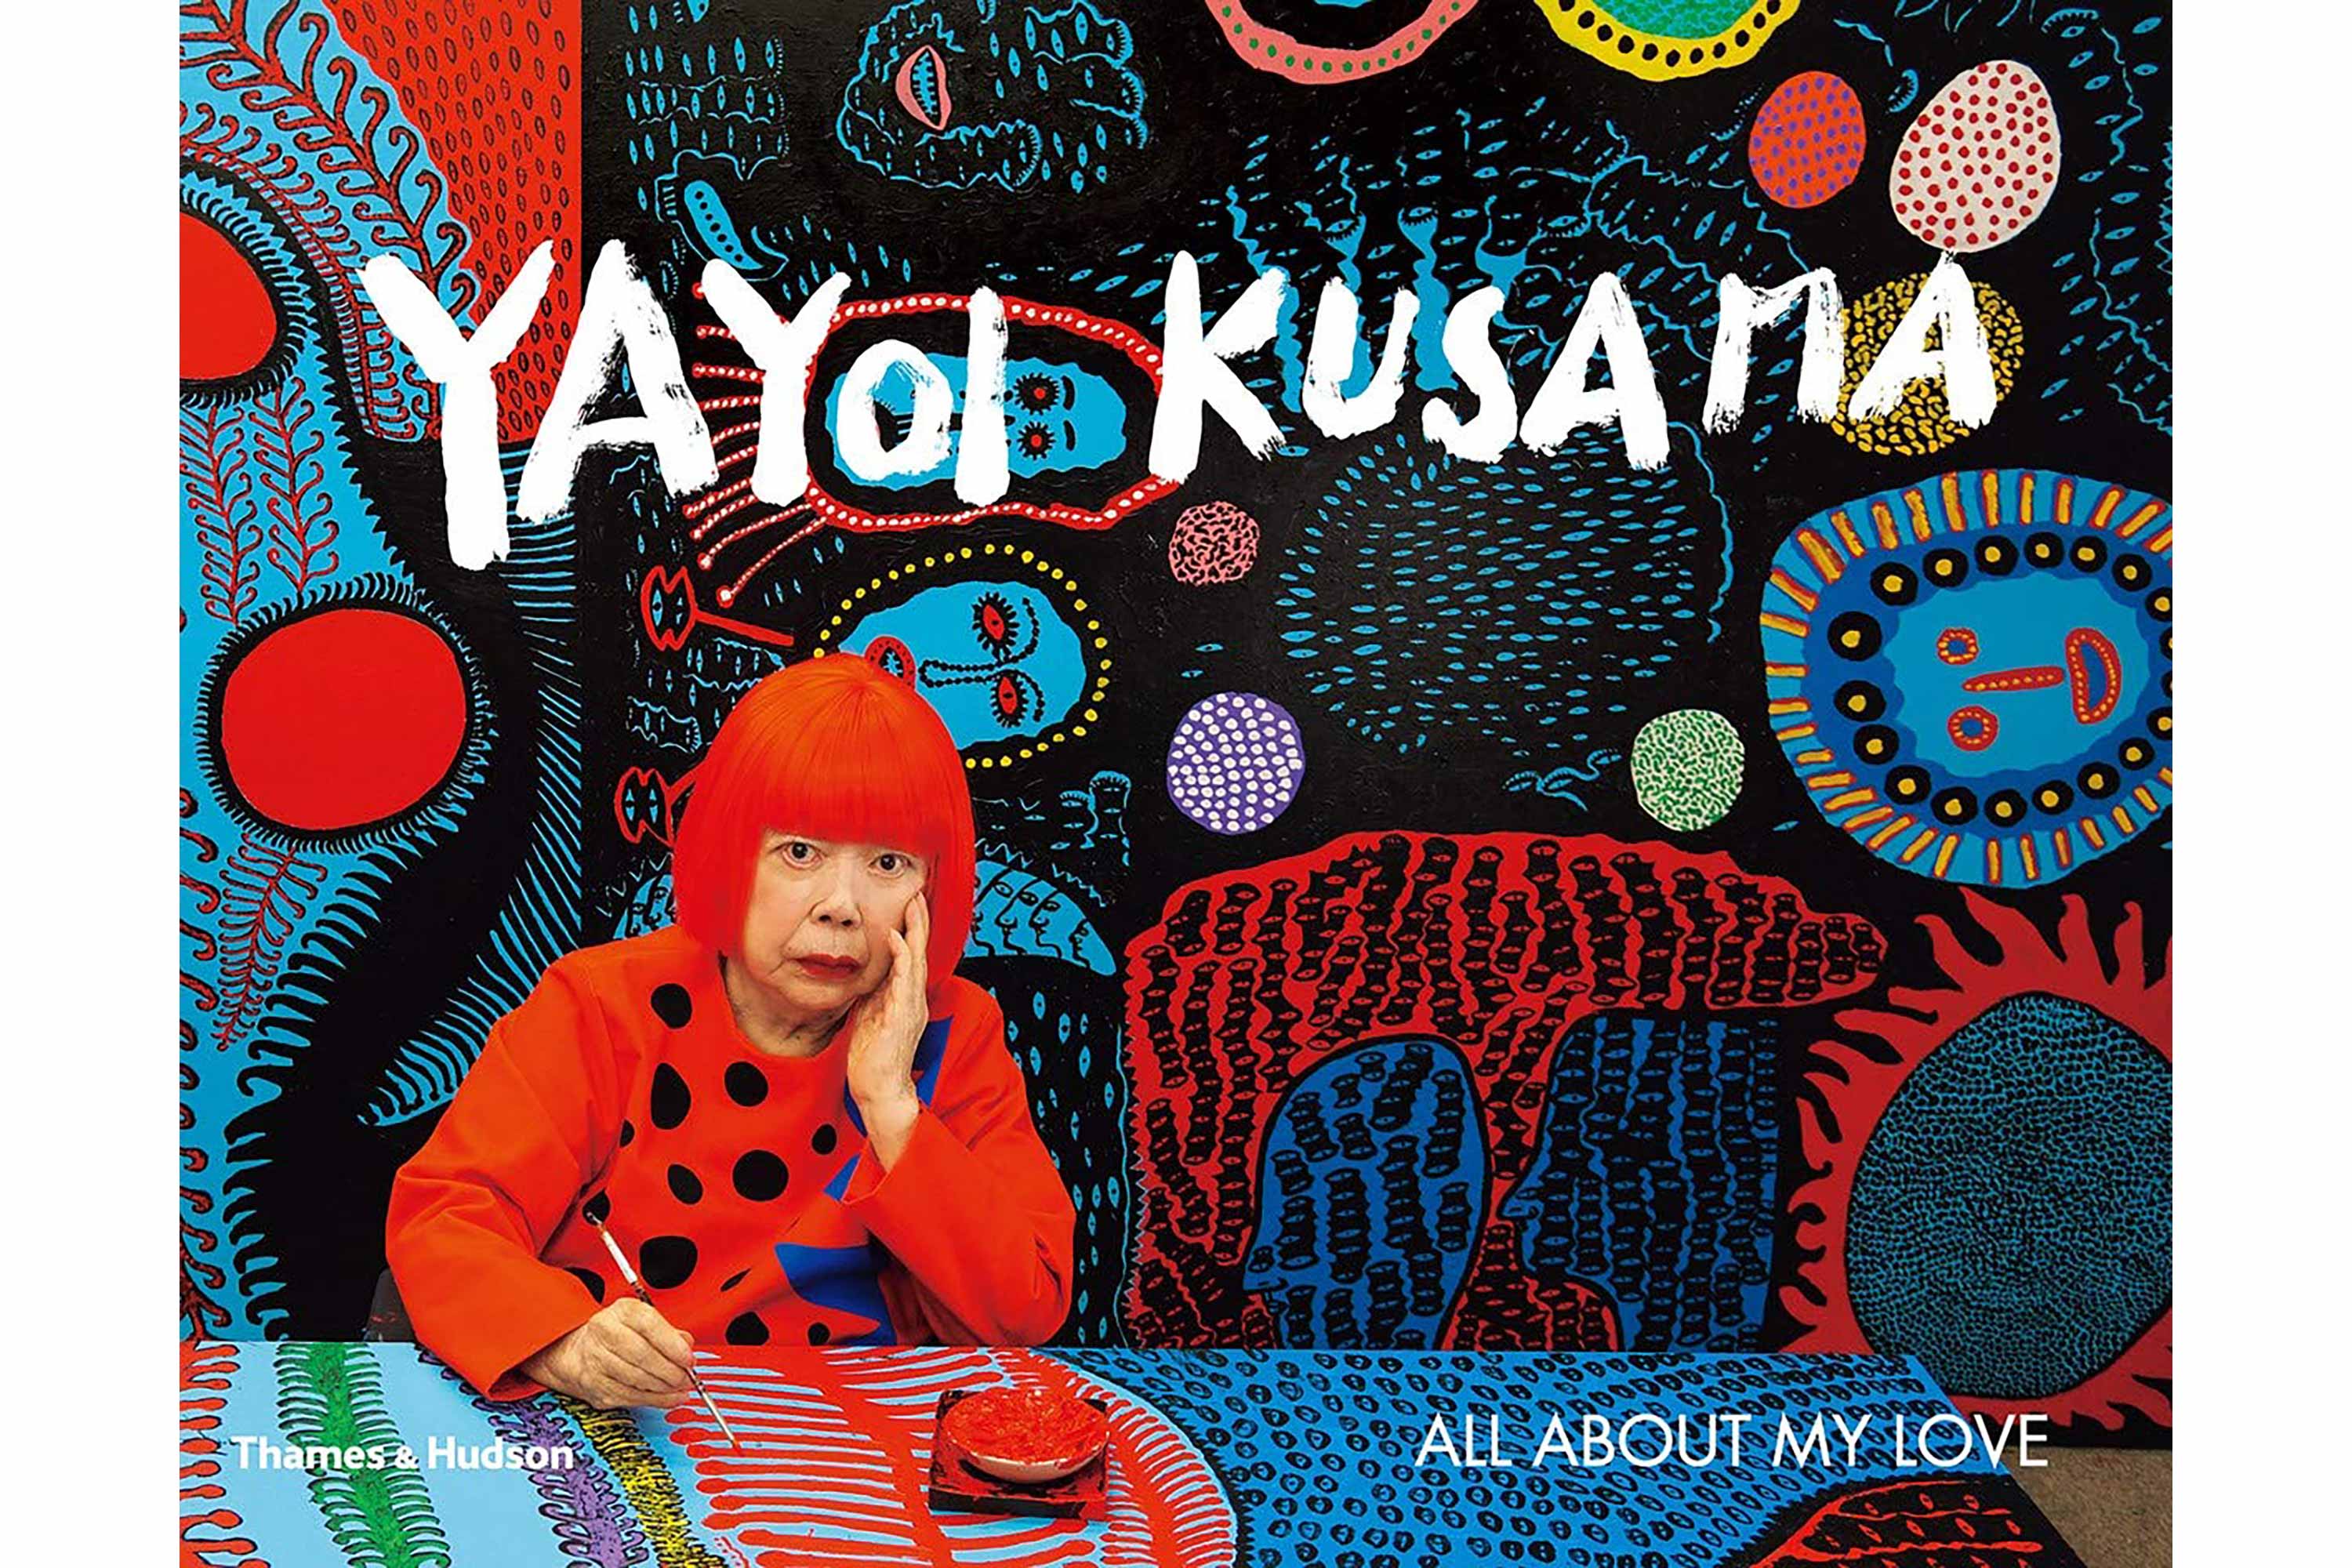 Vibrant new book welcomes you to the flamboyant world of artist Yayoi Kusama